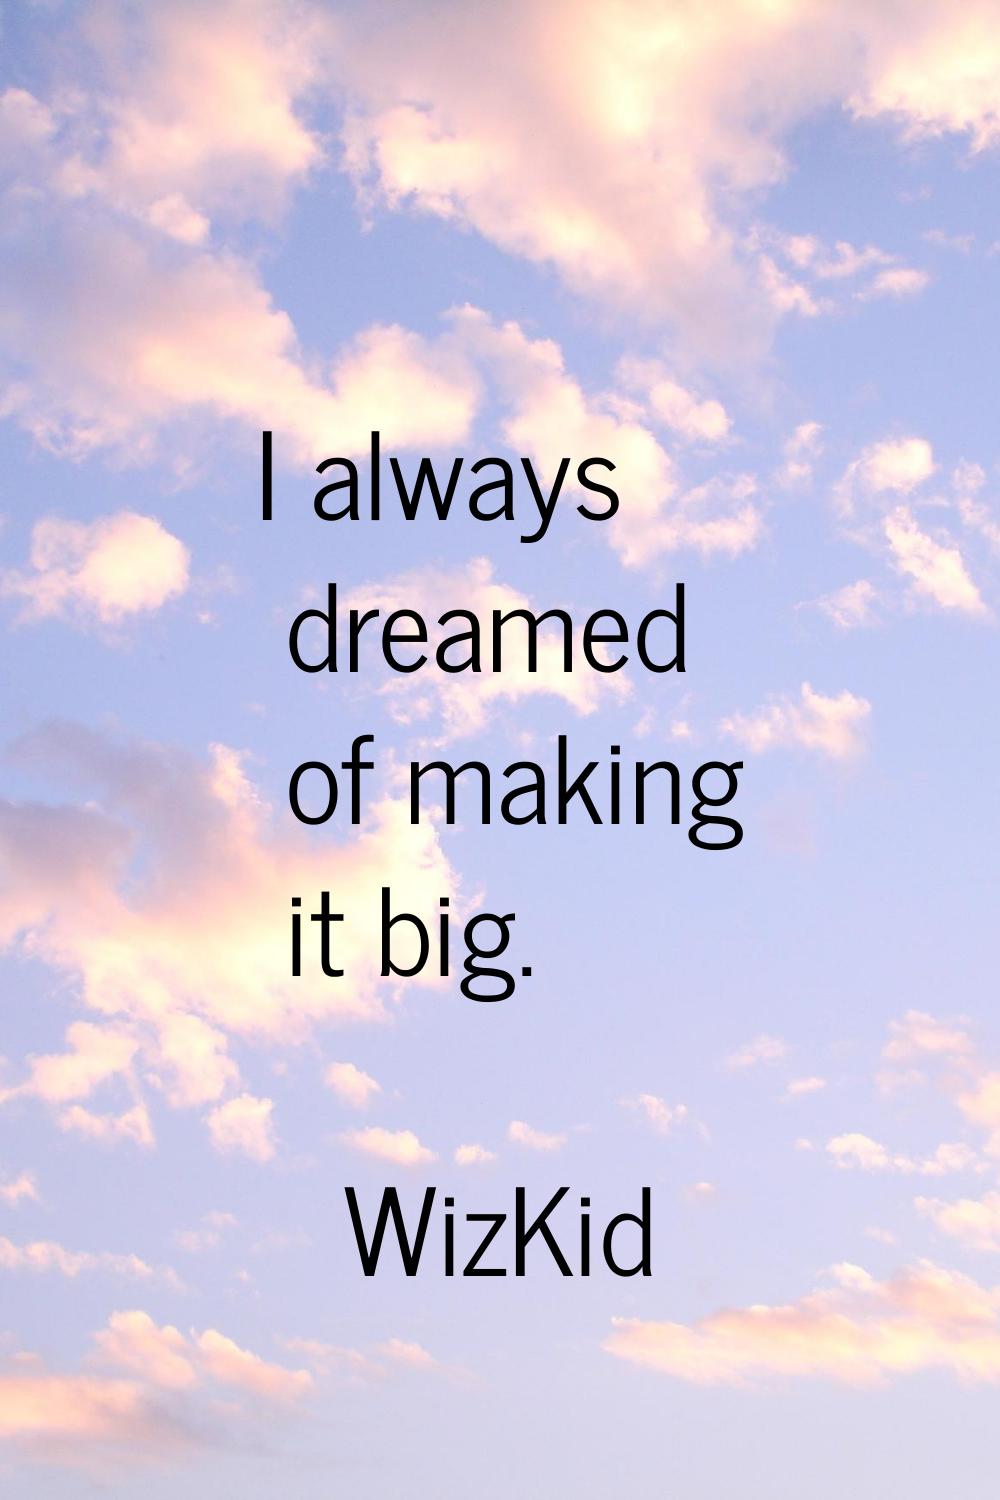 I always dreamed of making it big.